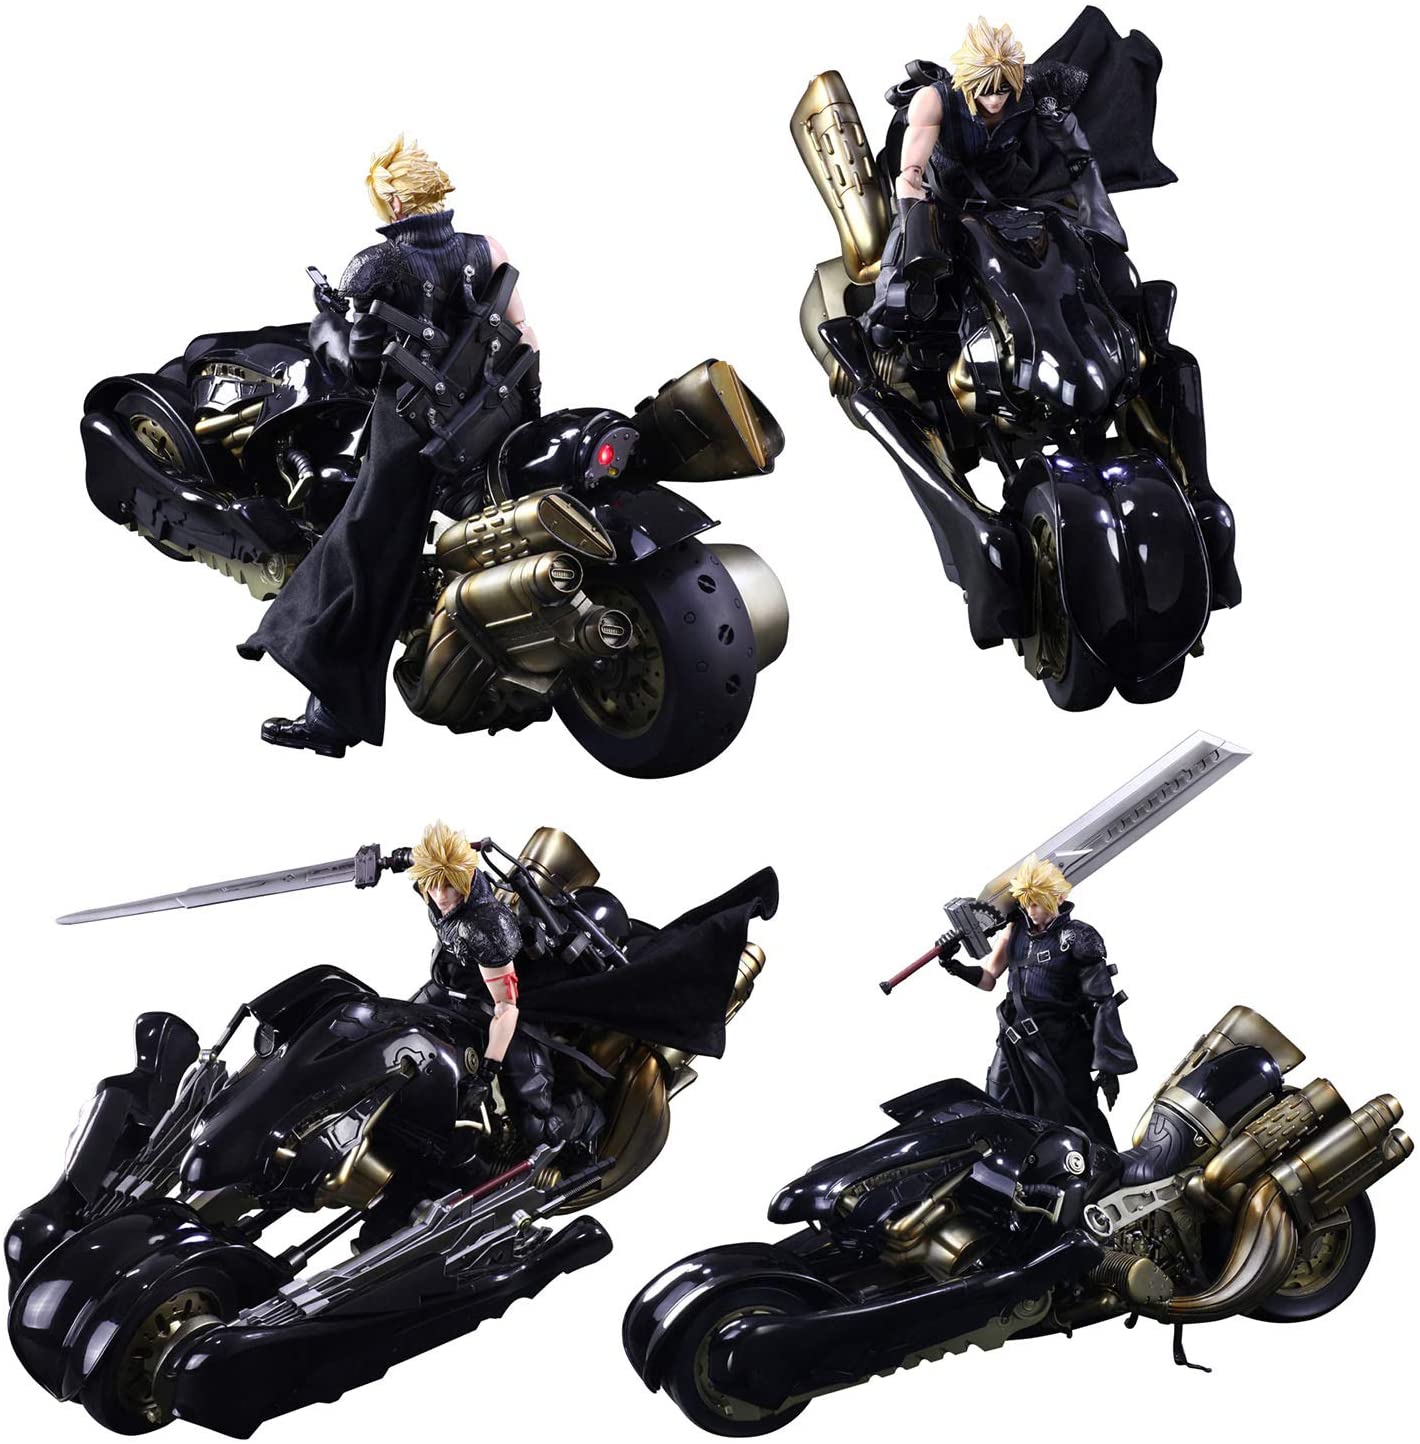 Square Enix Play Arts Kai Action Figure - Final Fantasy VII - Cloud Strife & Fenrir